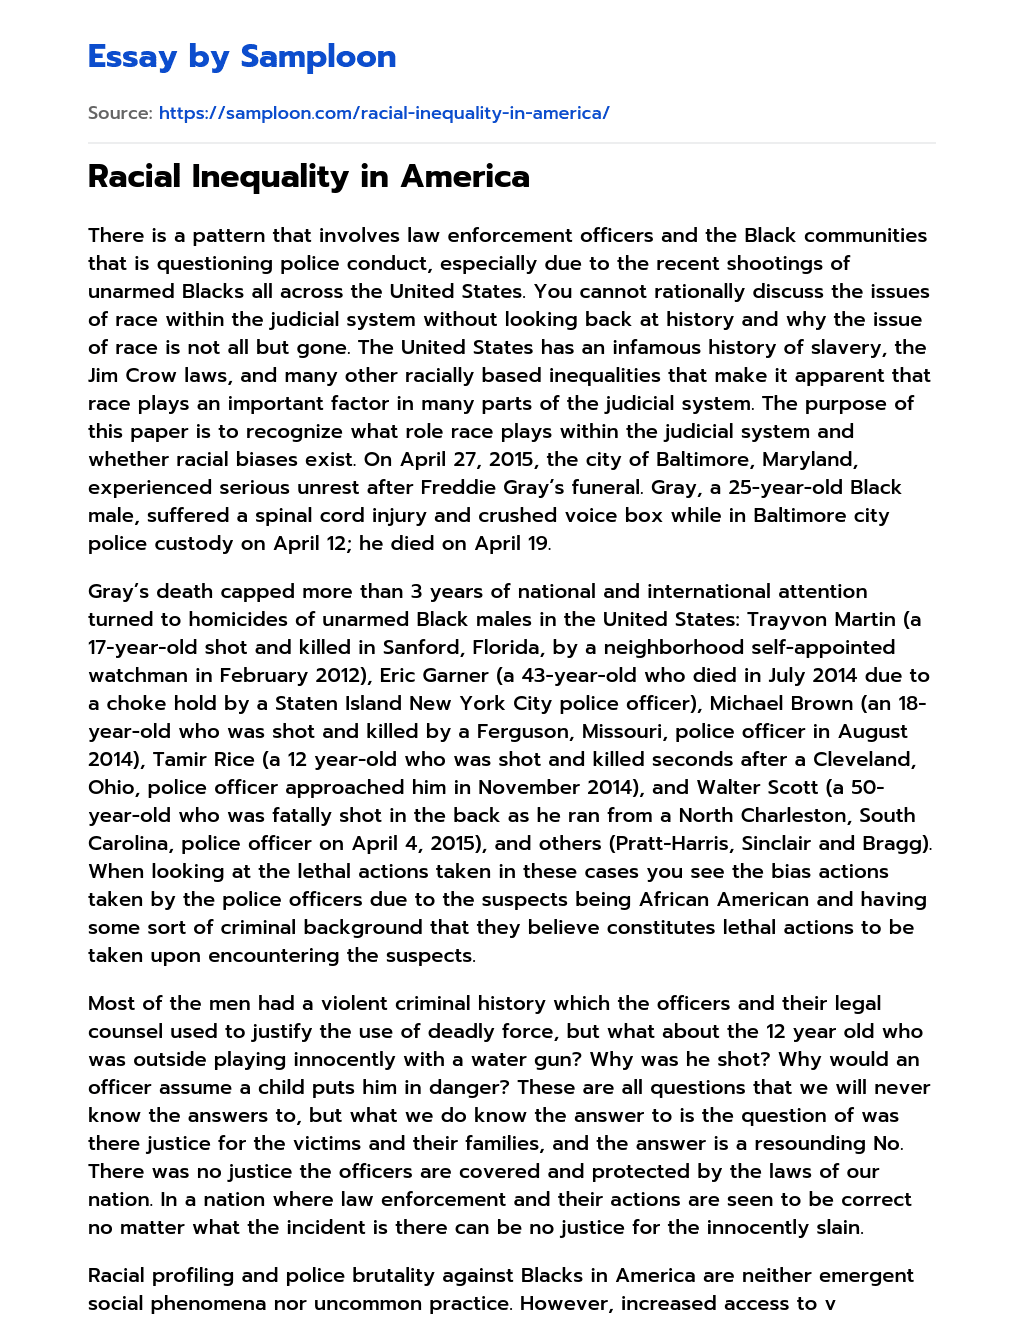 racial inequality intro essay